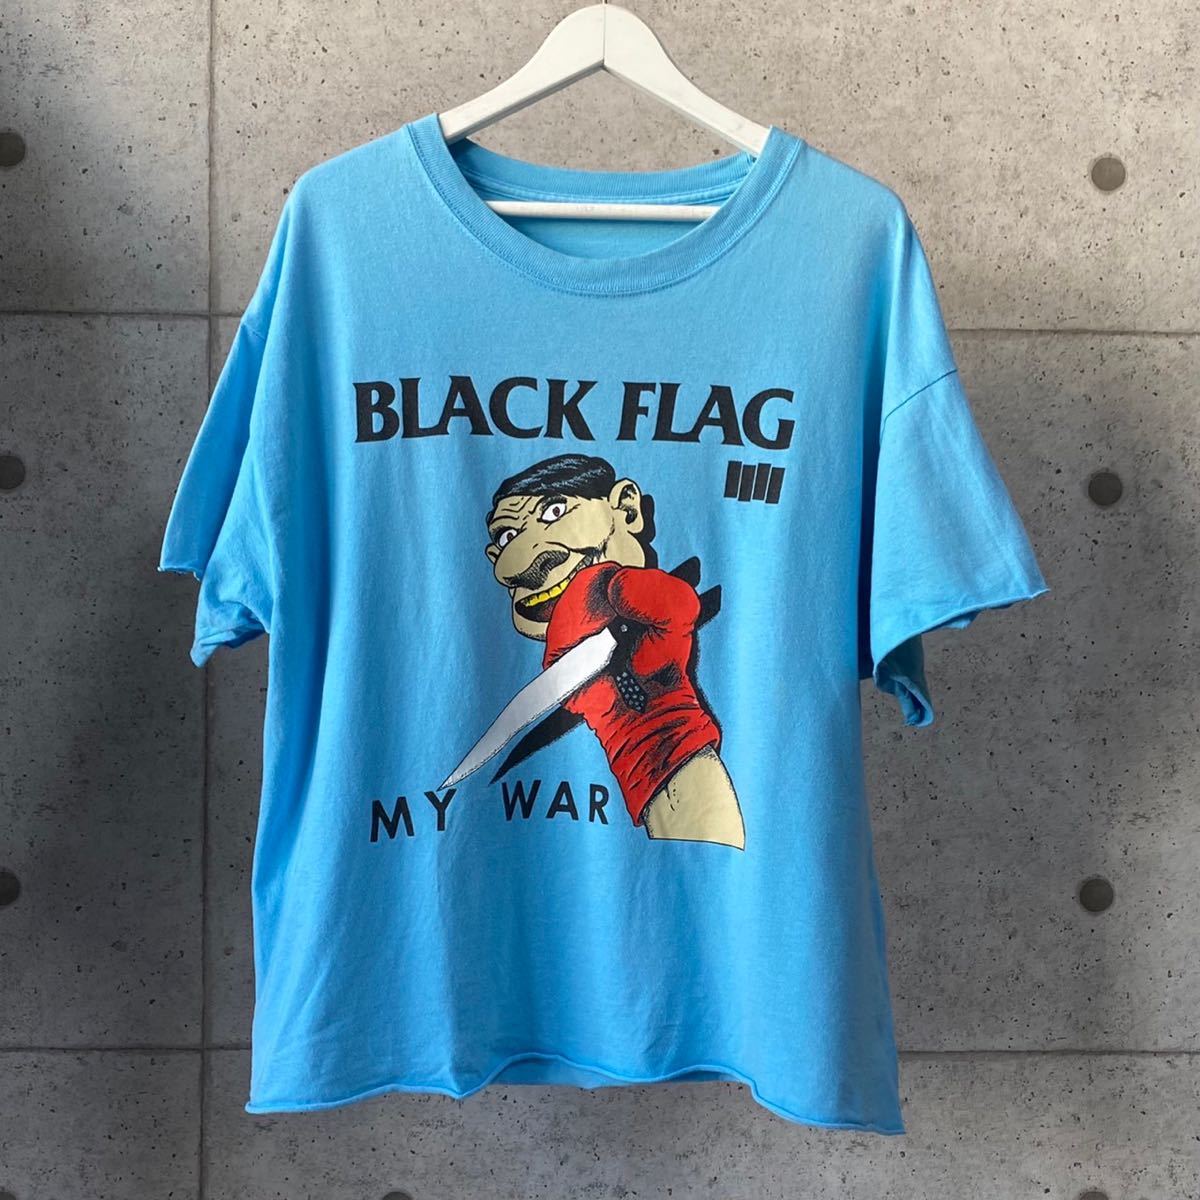 BLACK FLAG ヴィンテージTEE Tシャツ www.ch4x4.com